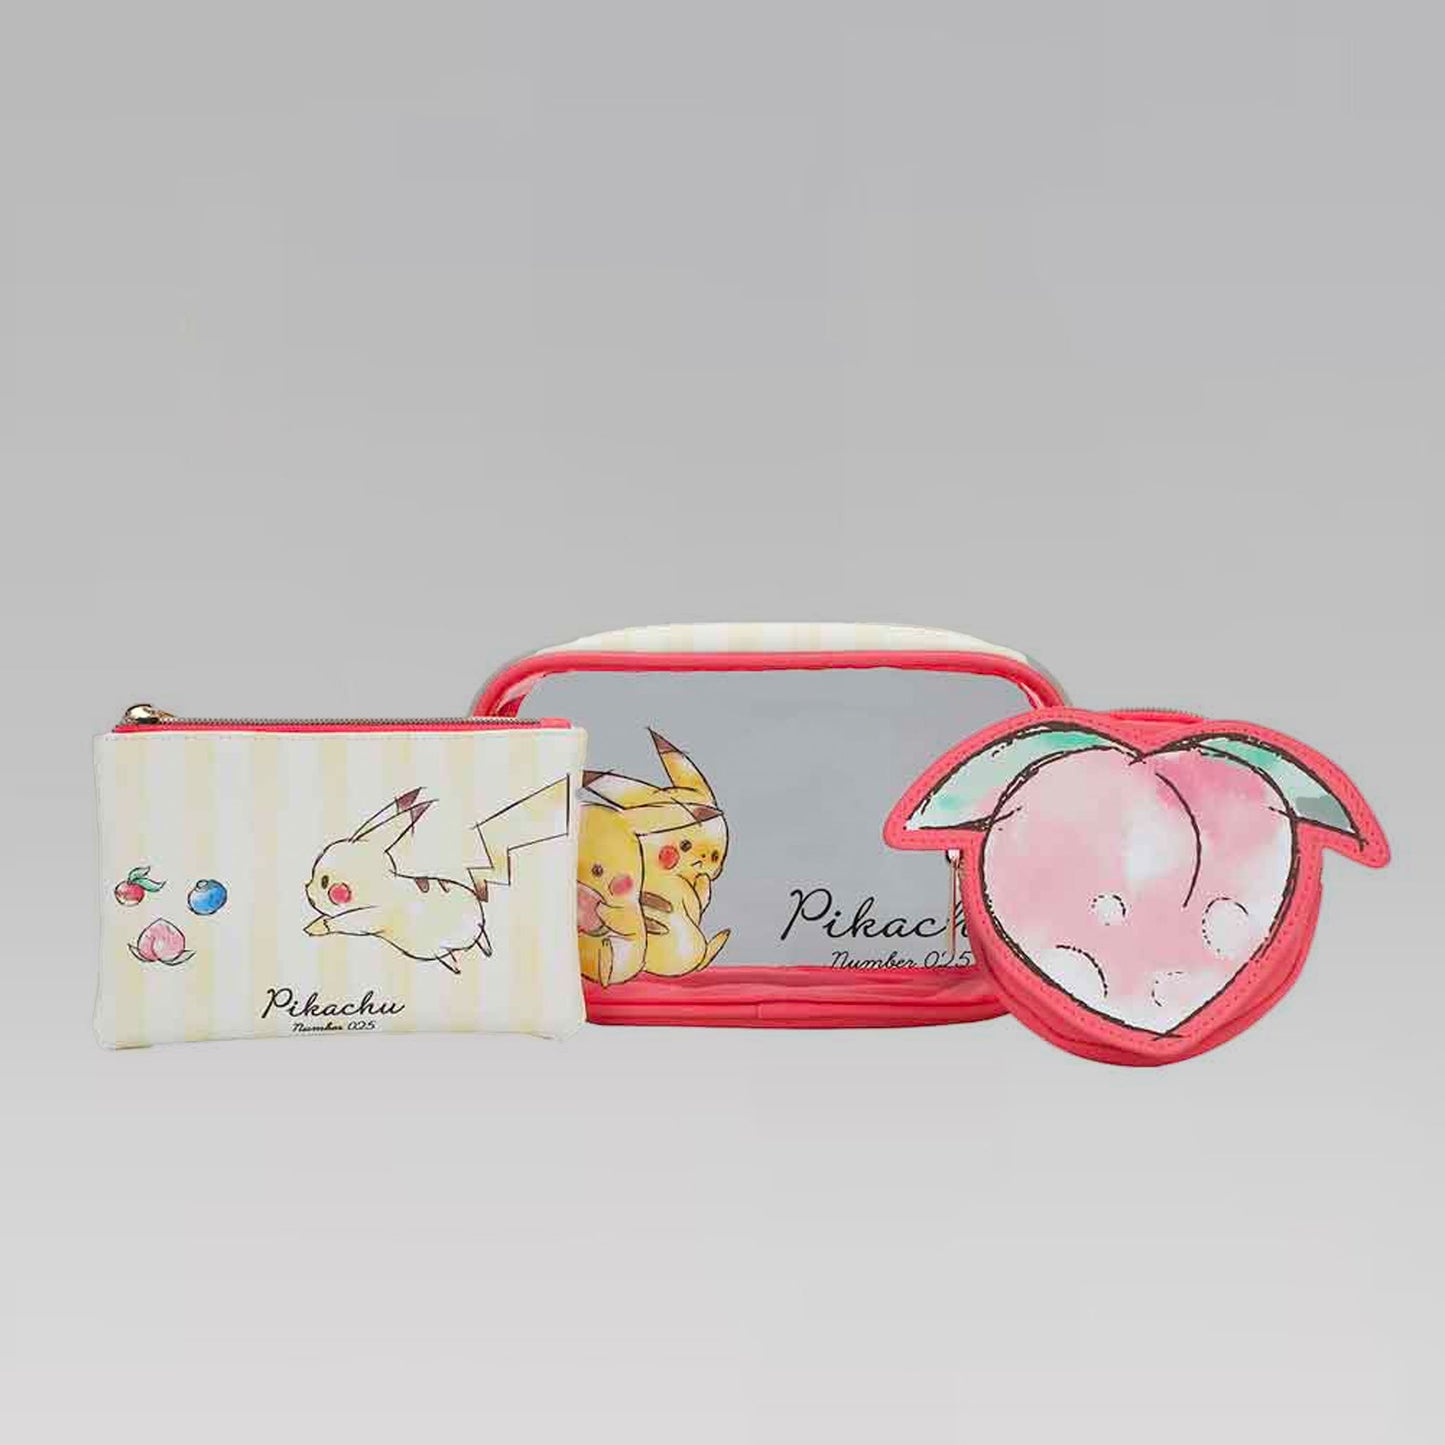 pikachu-berries-pokemon-3-piece-travel-pouch-set